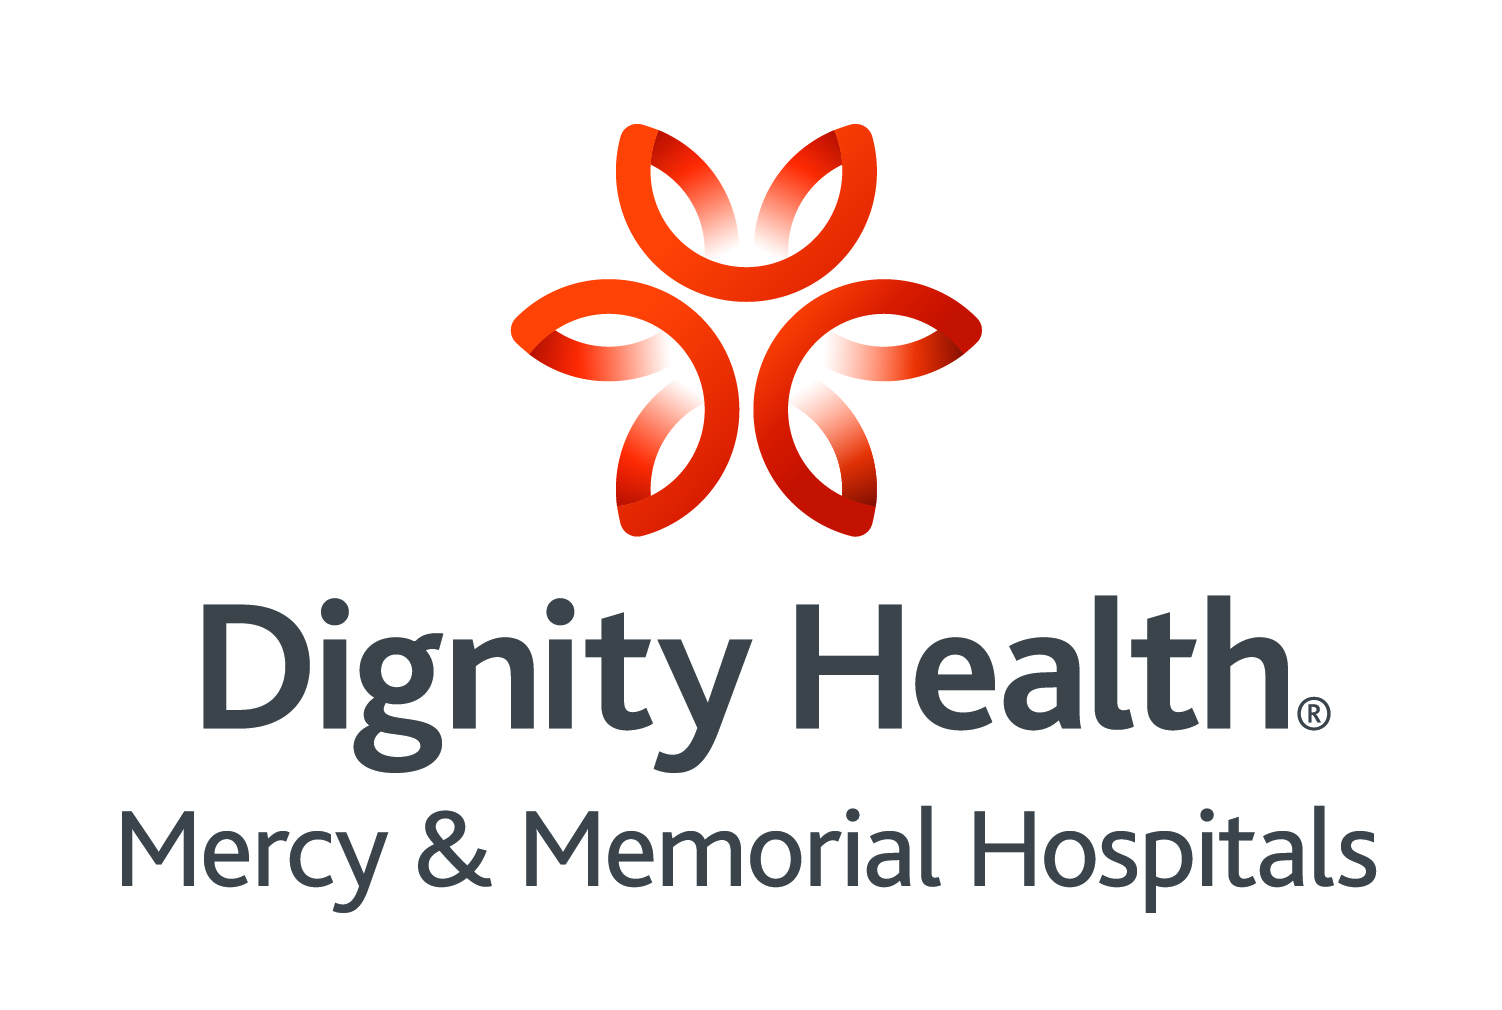 1. Dignity Health (Presenting)